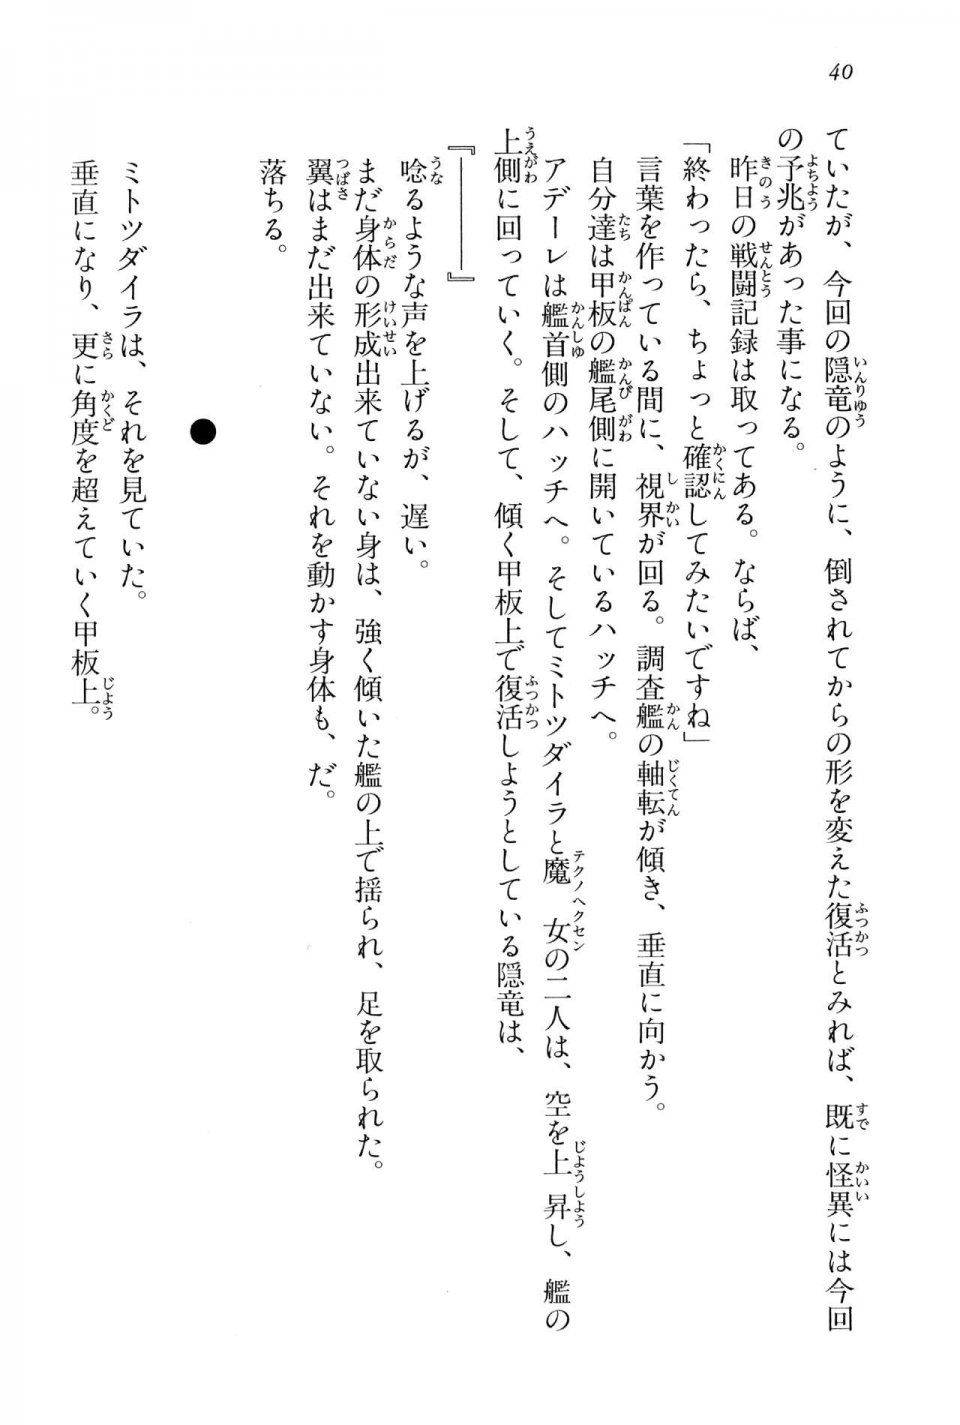 Kyoukai Senjou no Horizon BD Special Mininovel Vol 4(2B) - Photo #44